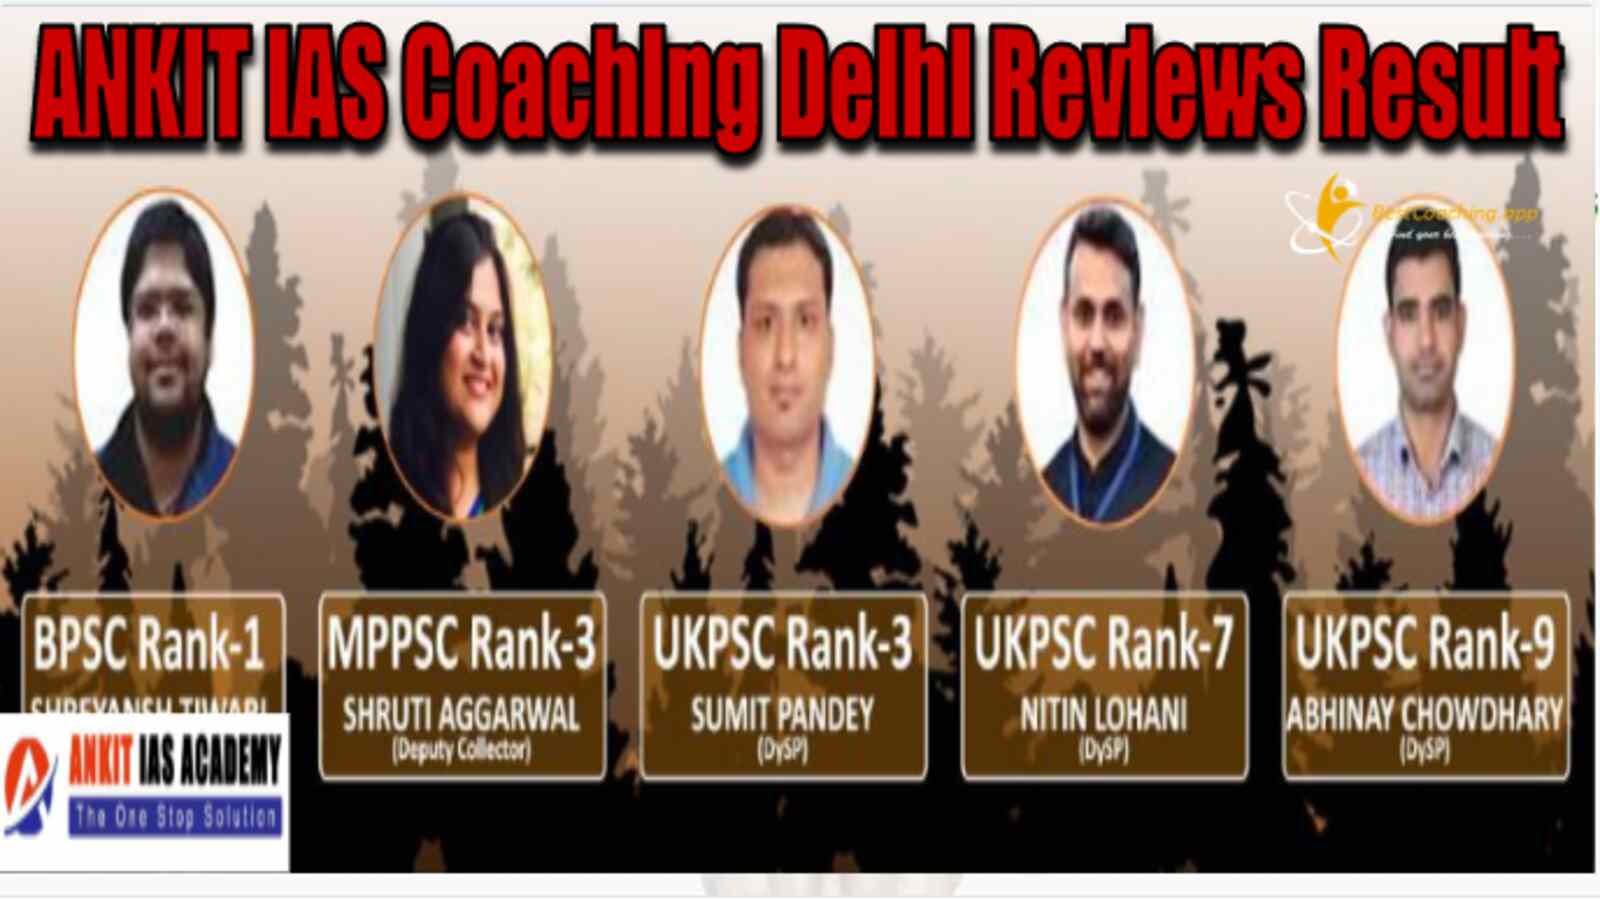 ANKIT IAS Coaching Delhi Review Result